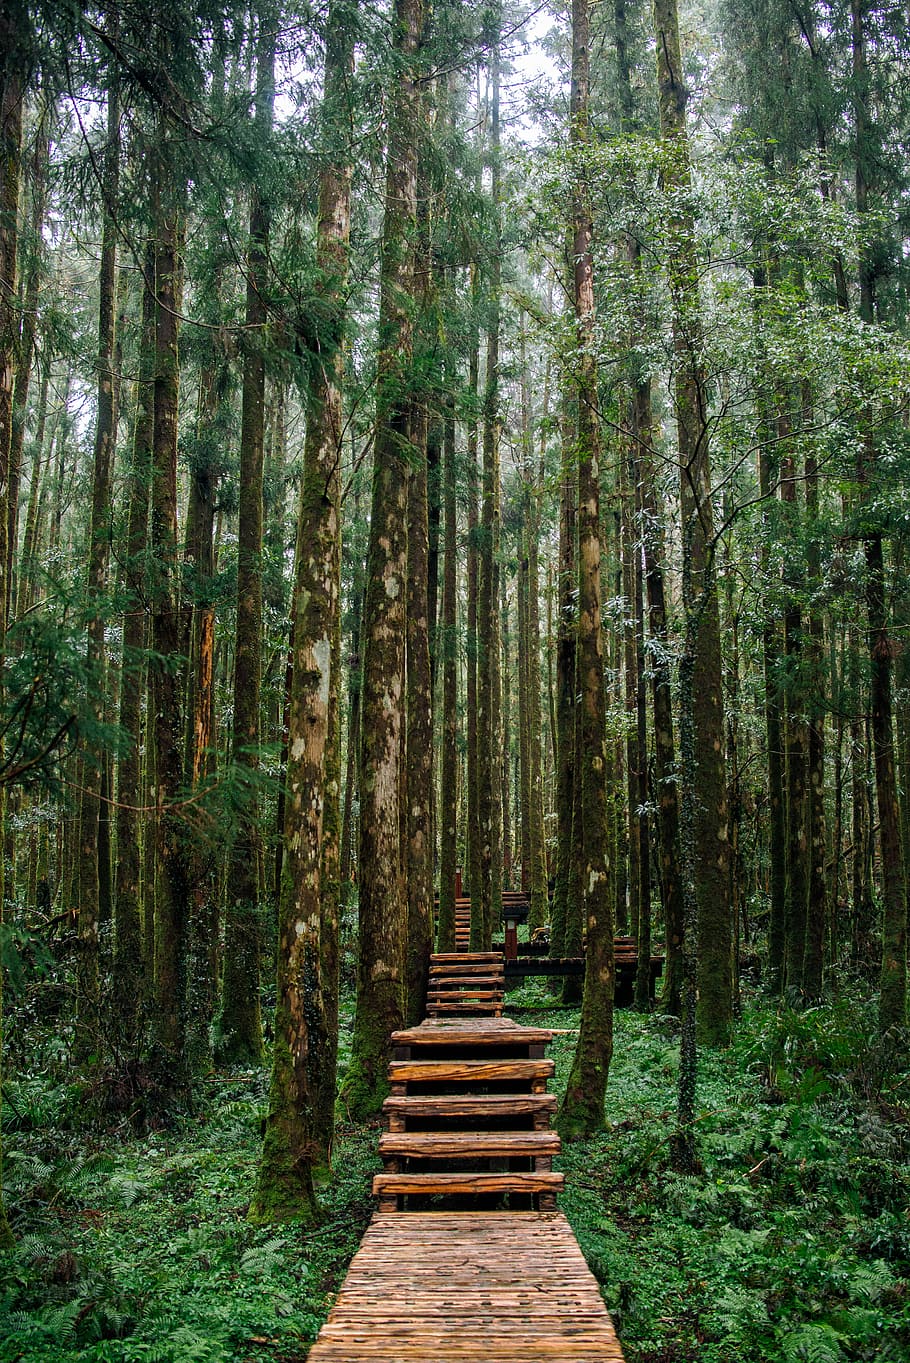 brown wooden bridge inside forest, brown wooden pathway in forest